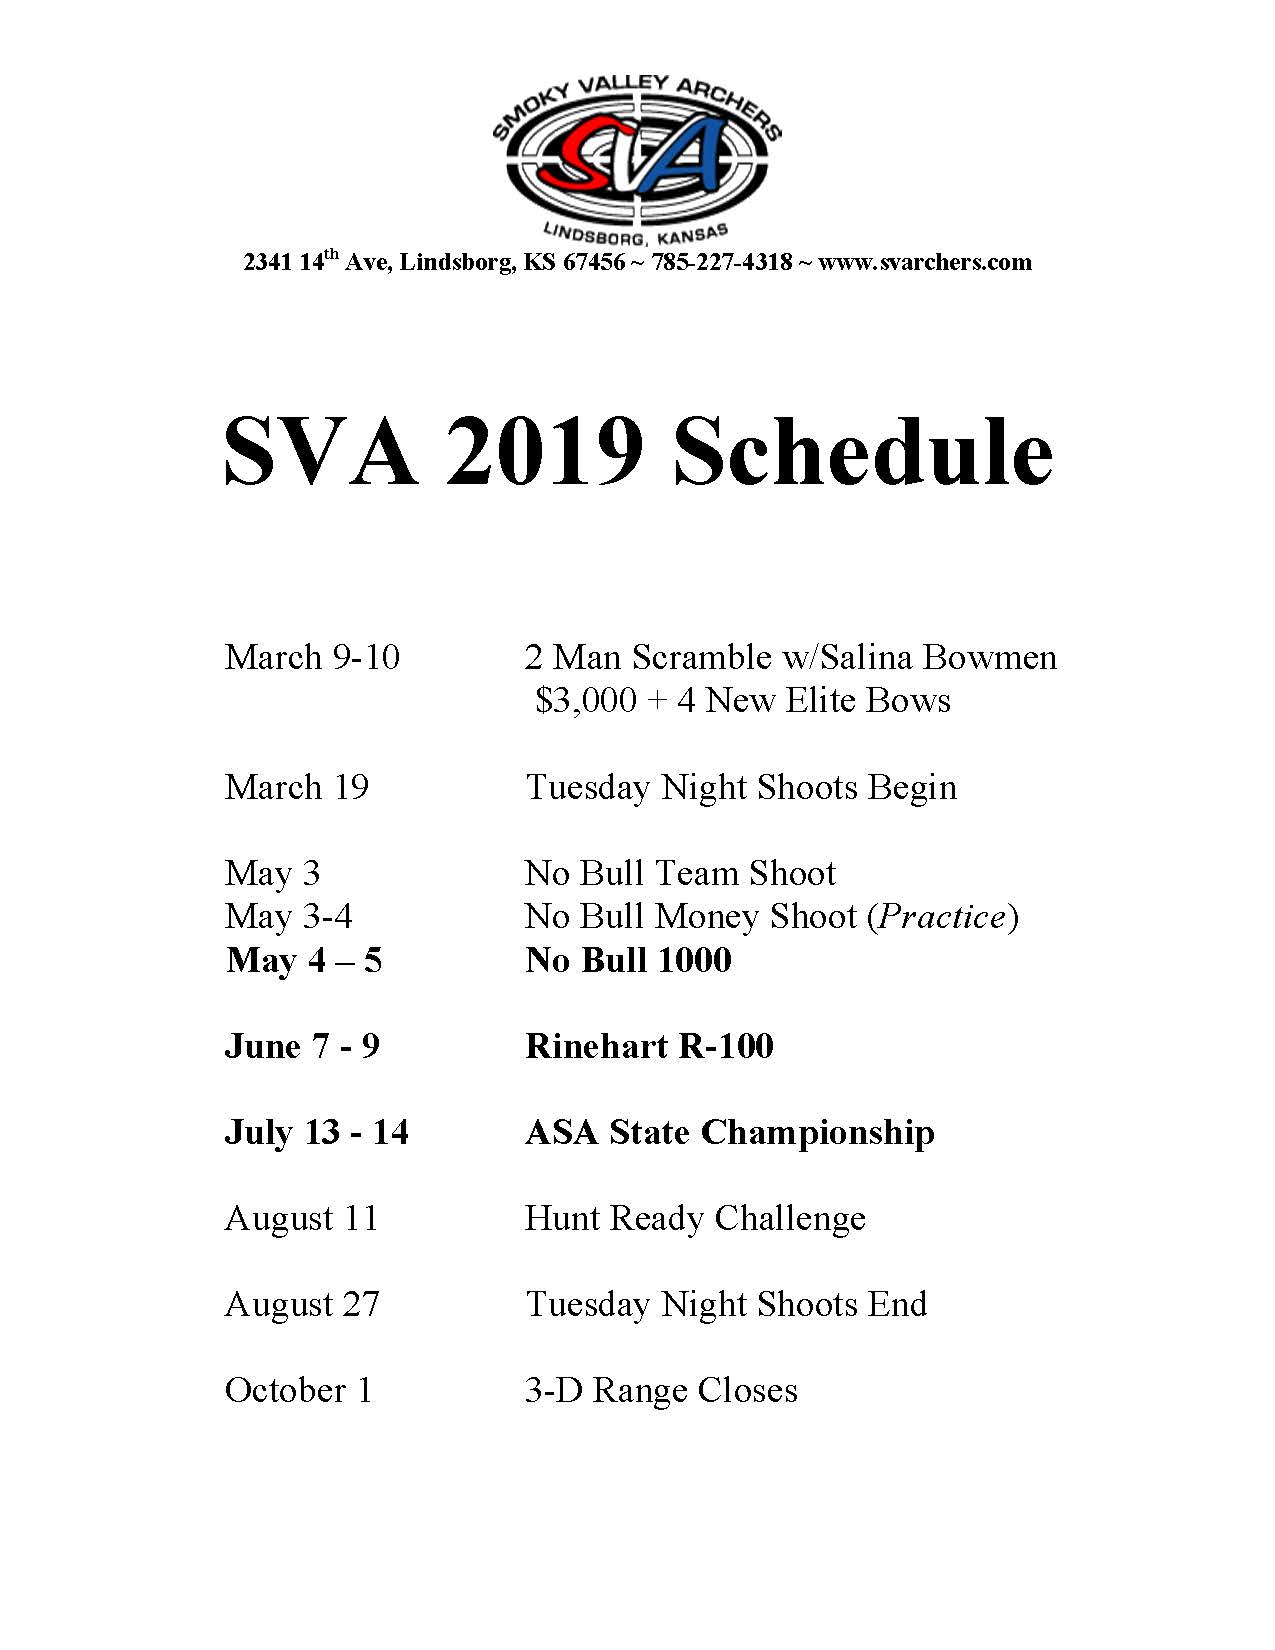 2019 SVA Schedule Smoky Valley Shooting Sports, INC.